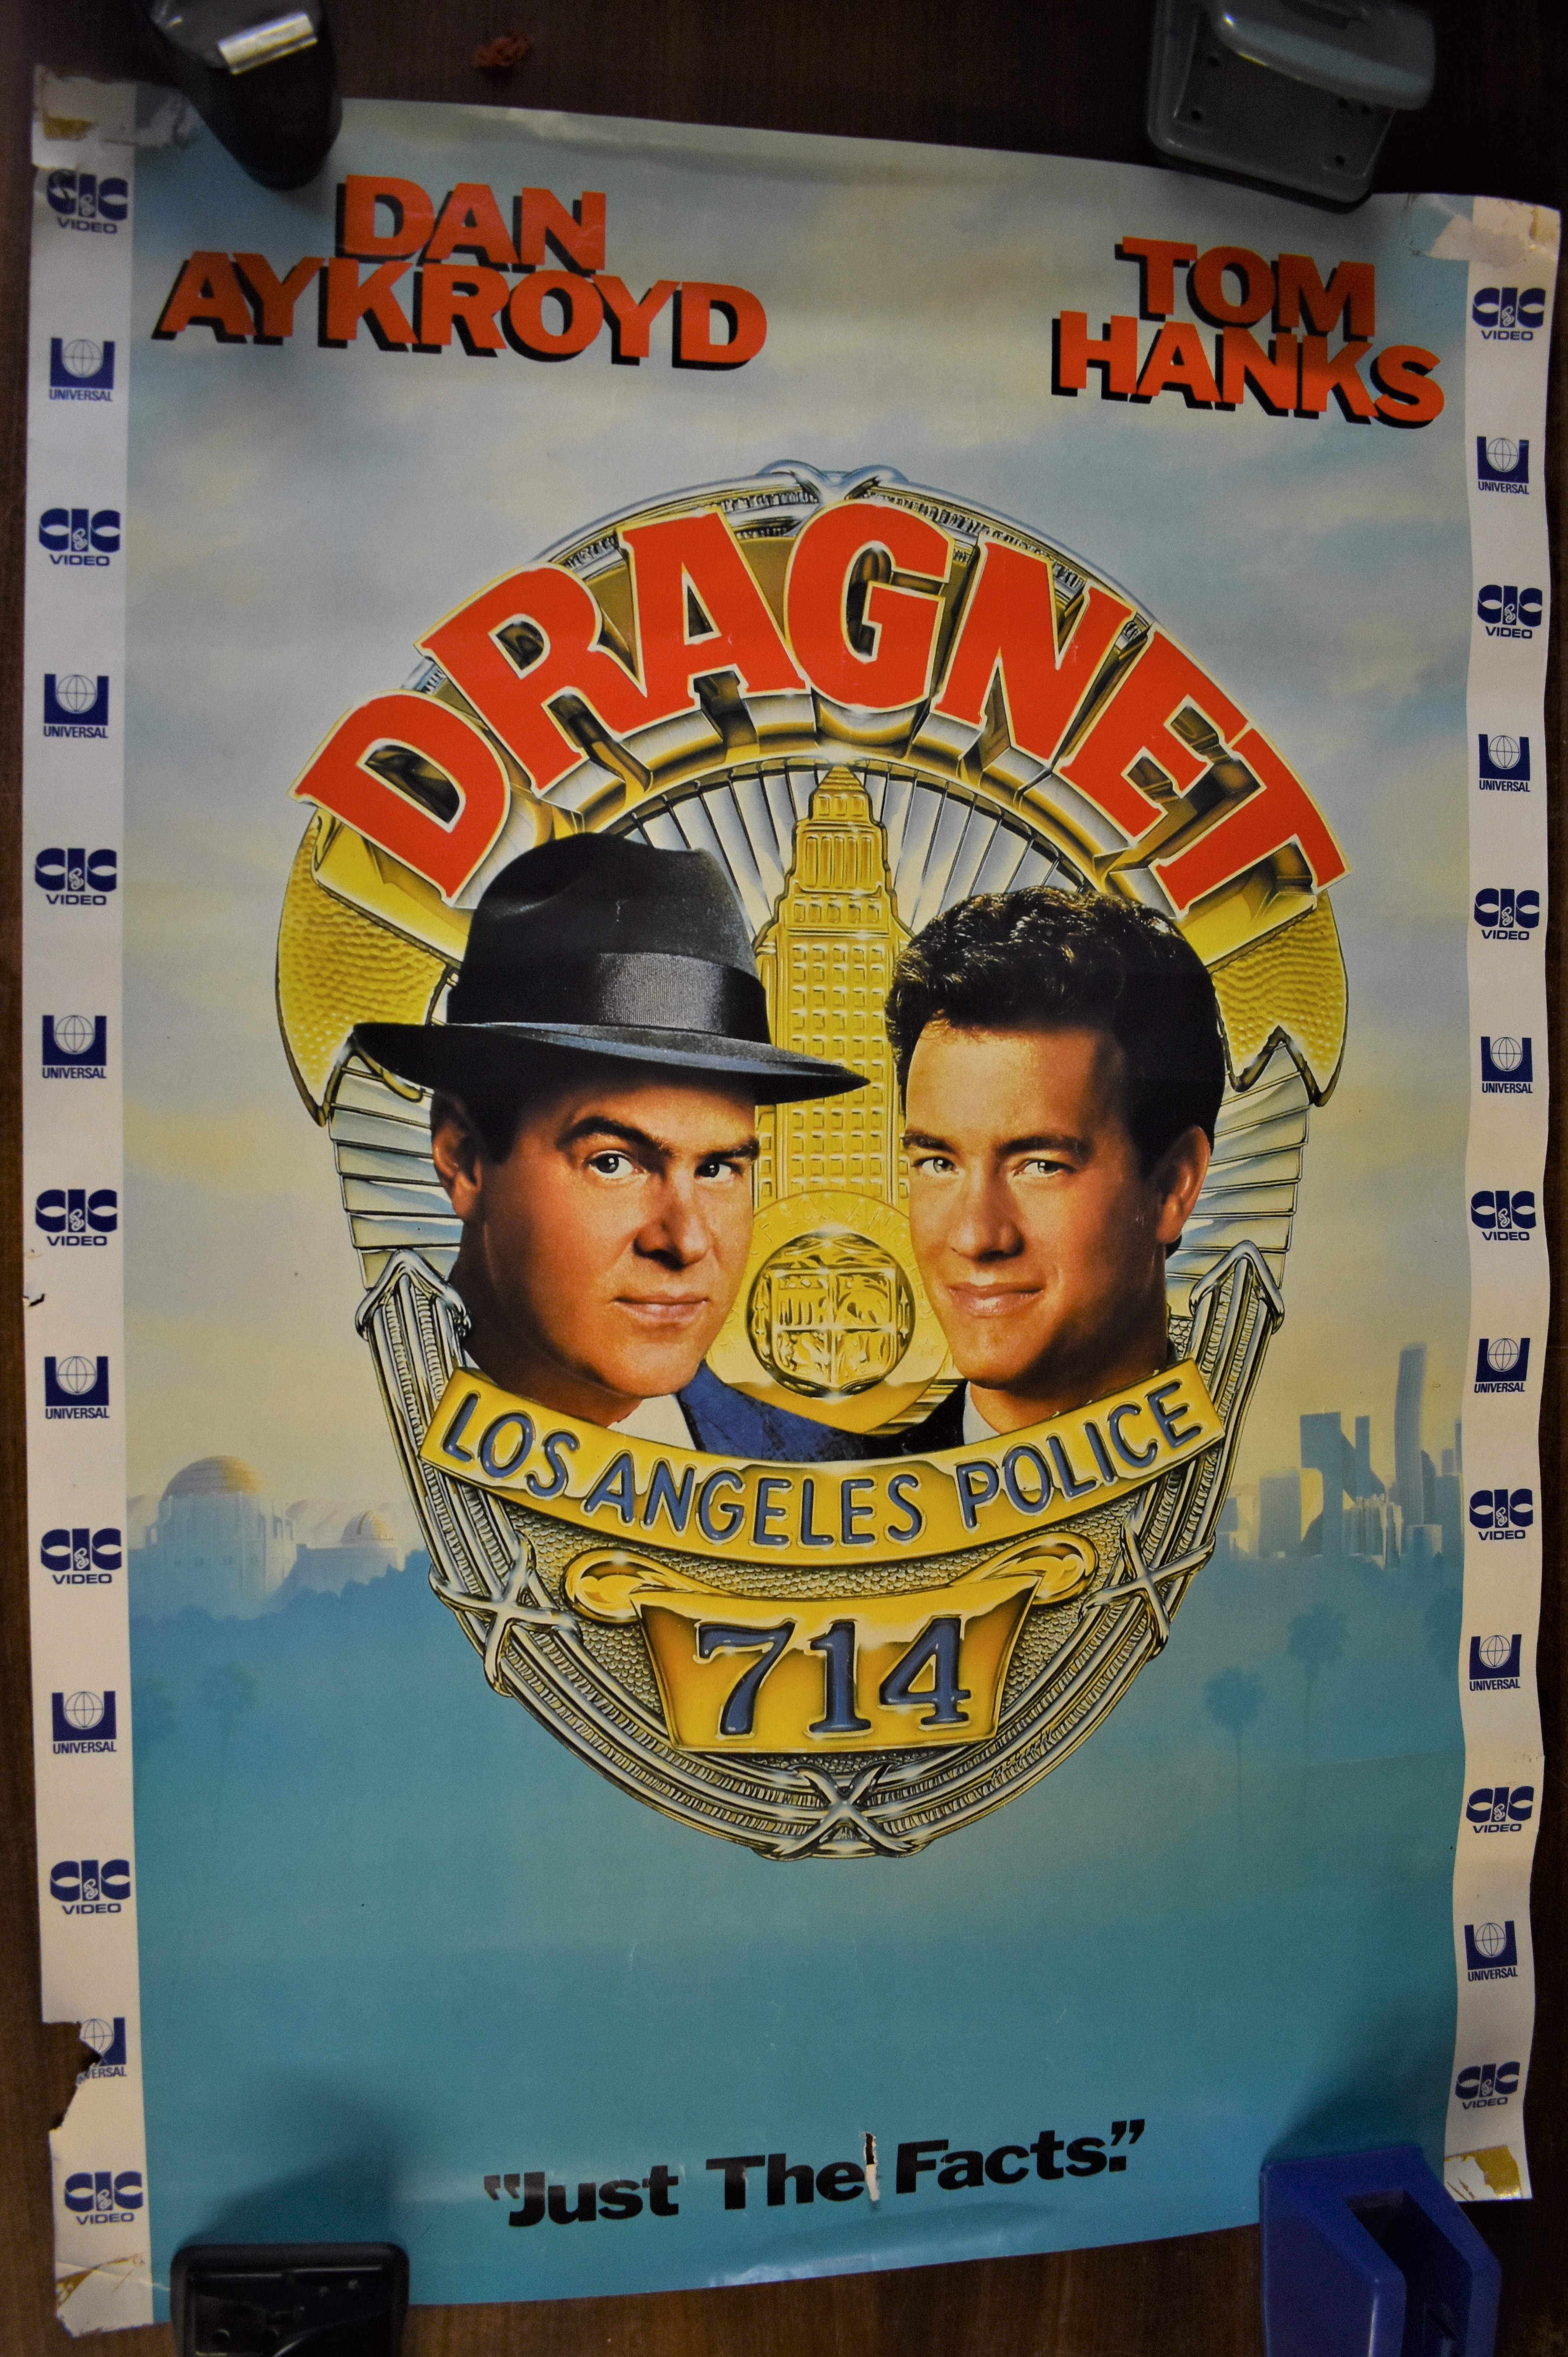 Dragnet - Cinematic Poster, starring Dan Aykroyd and Tom Hanks. Measures 81cm x 59cm. Poor